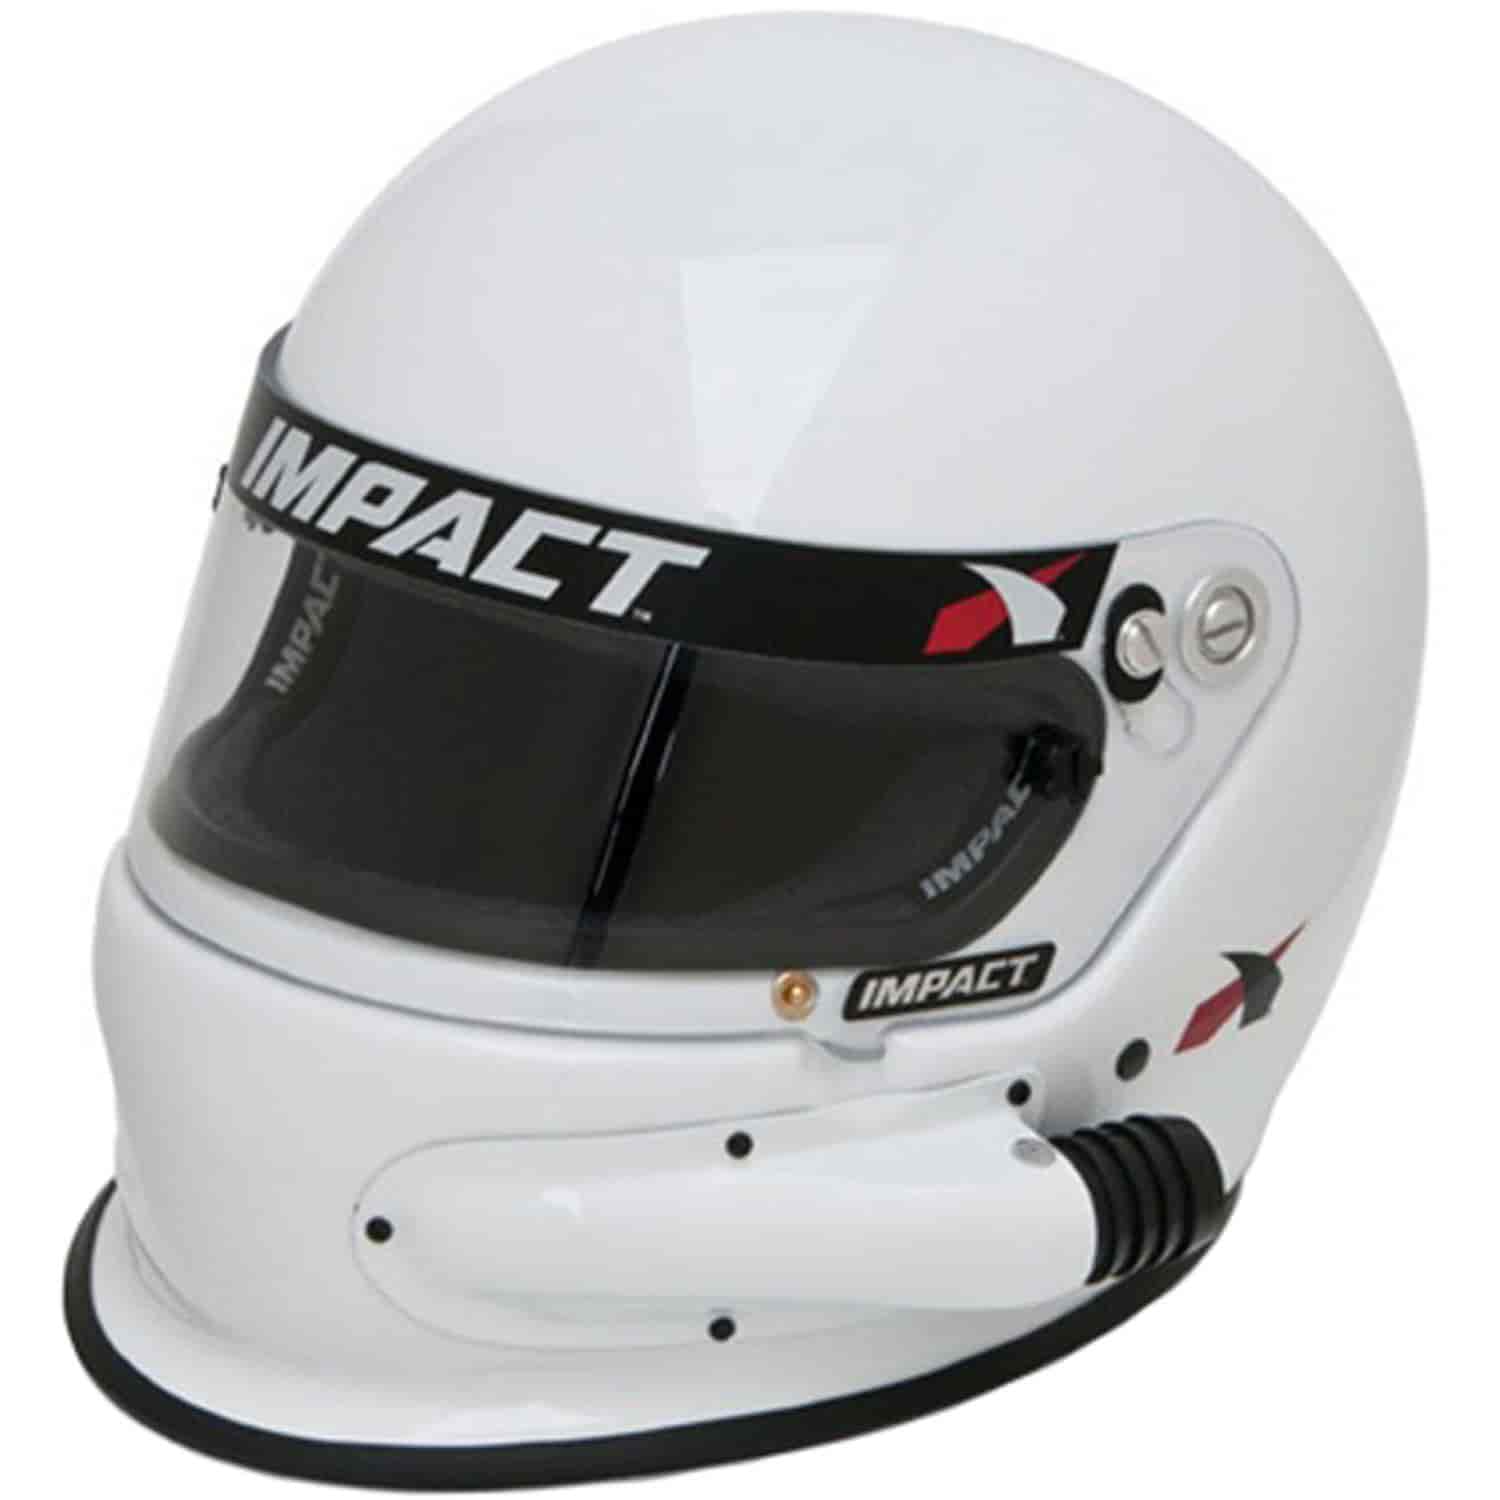 Impact Racing Super Charger Side Air Helmets SA2020